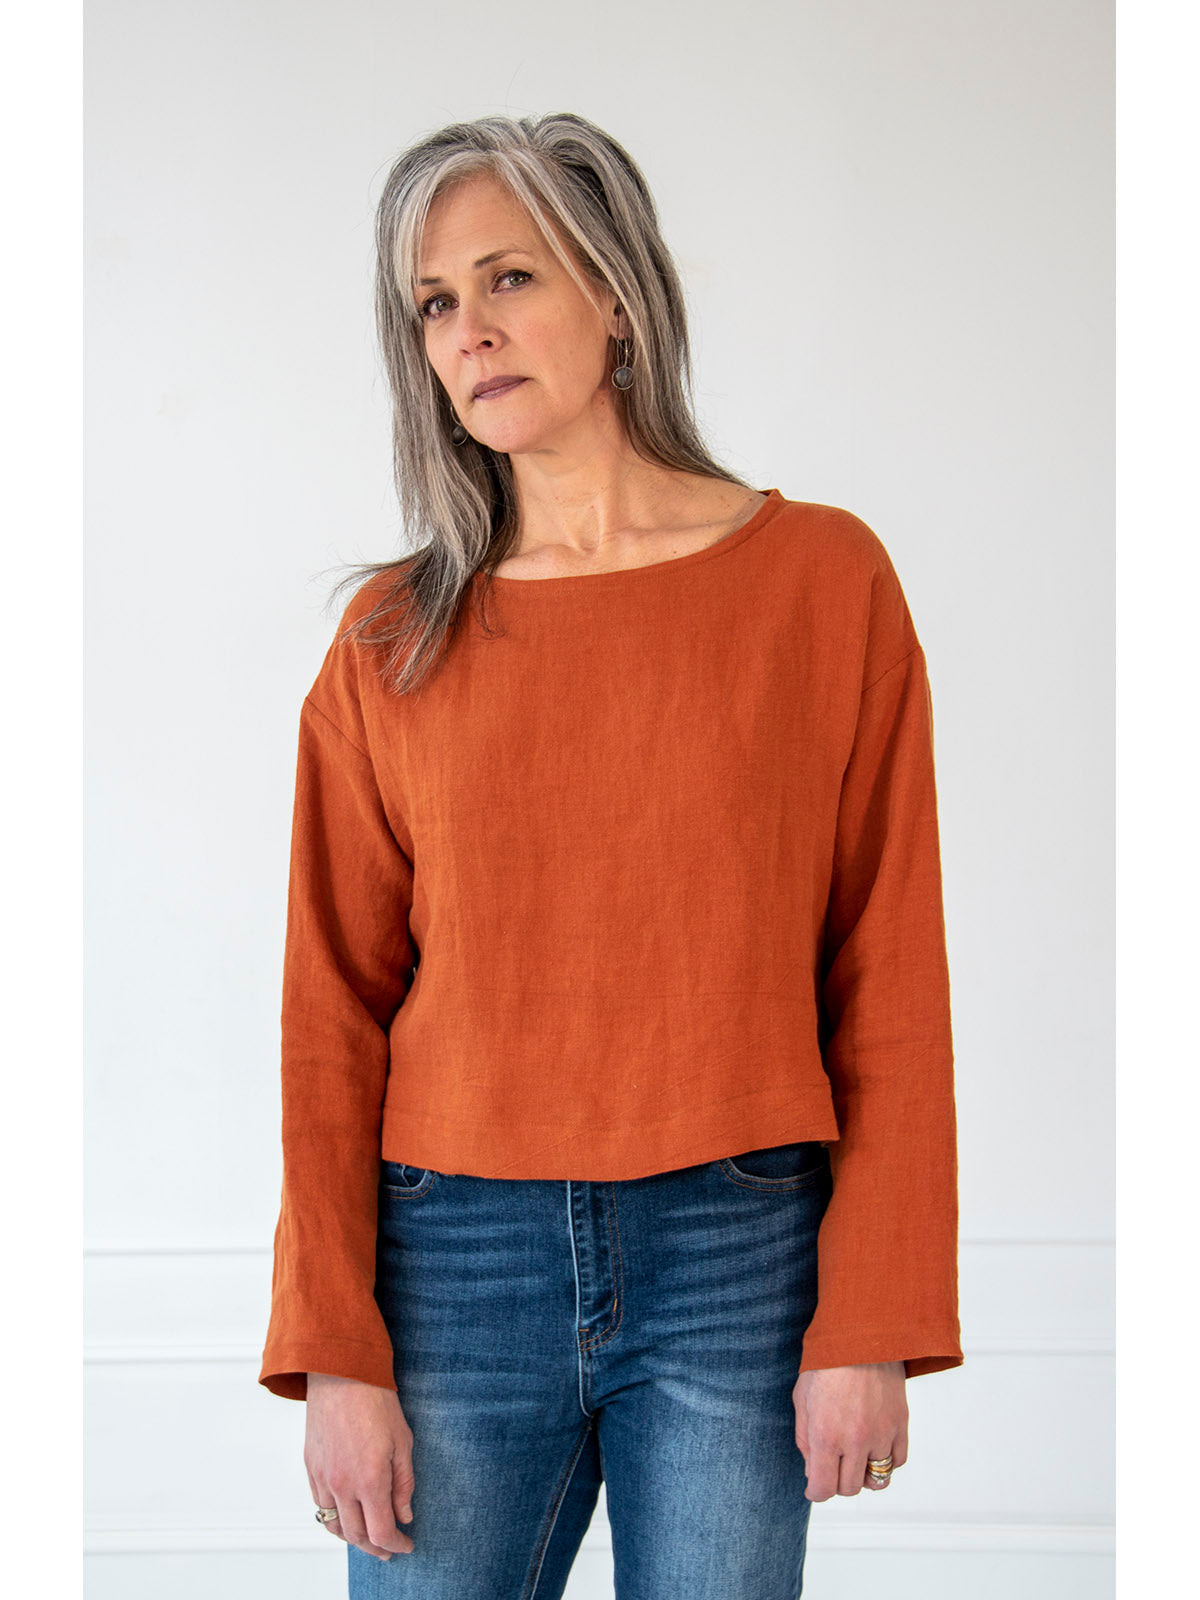 Tangerine Long Sleeve Top – Kathleen O'Grady